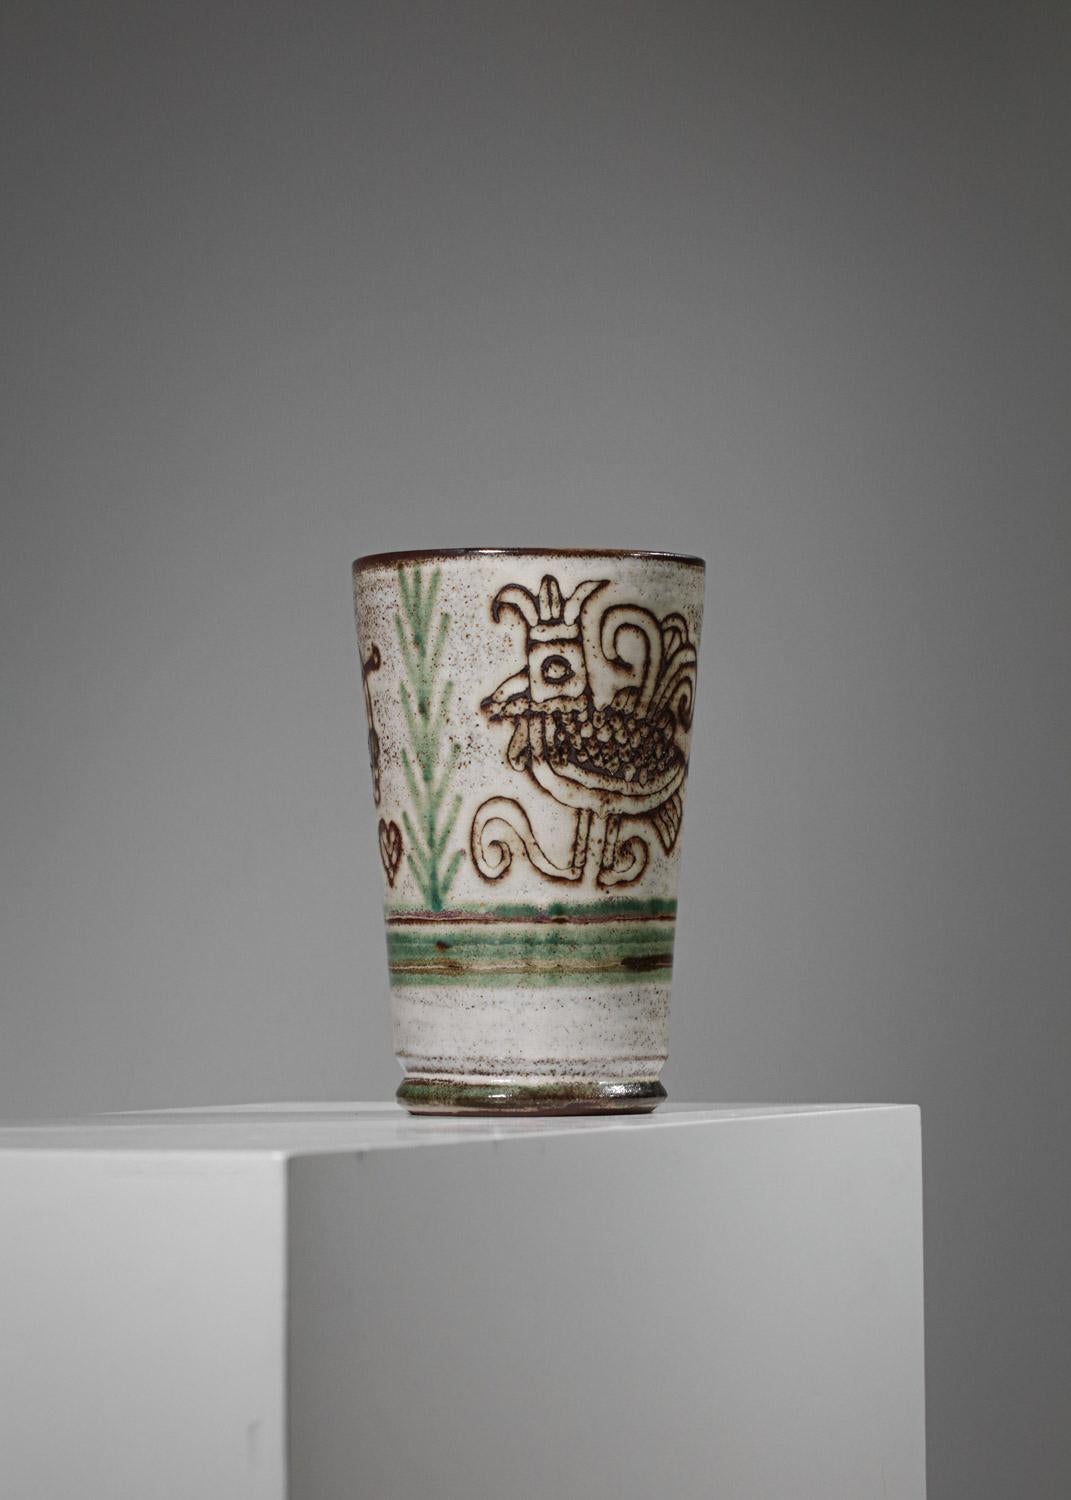 French Vase by Michel Barbier in Vallauris Ceramic 50's Bird Design